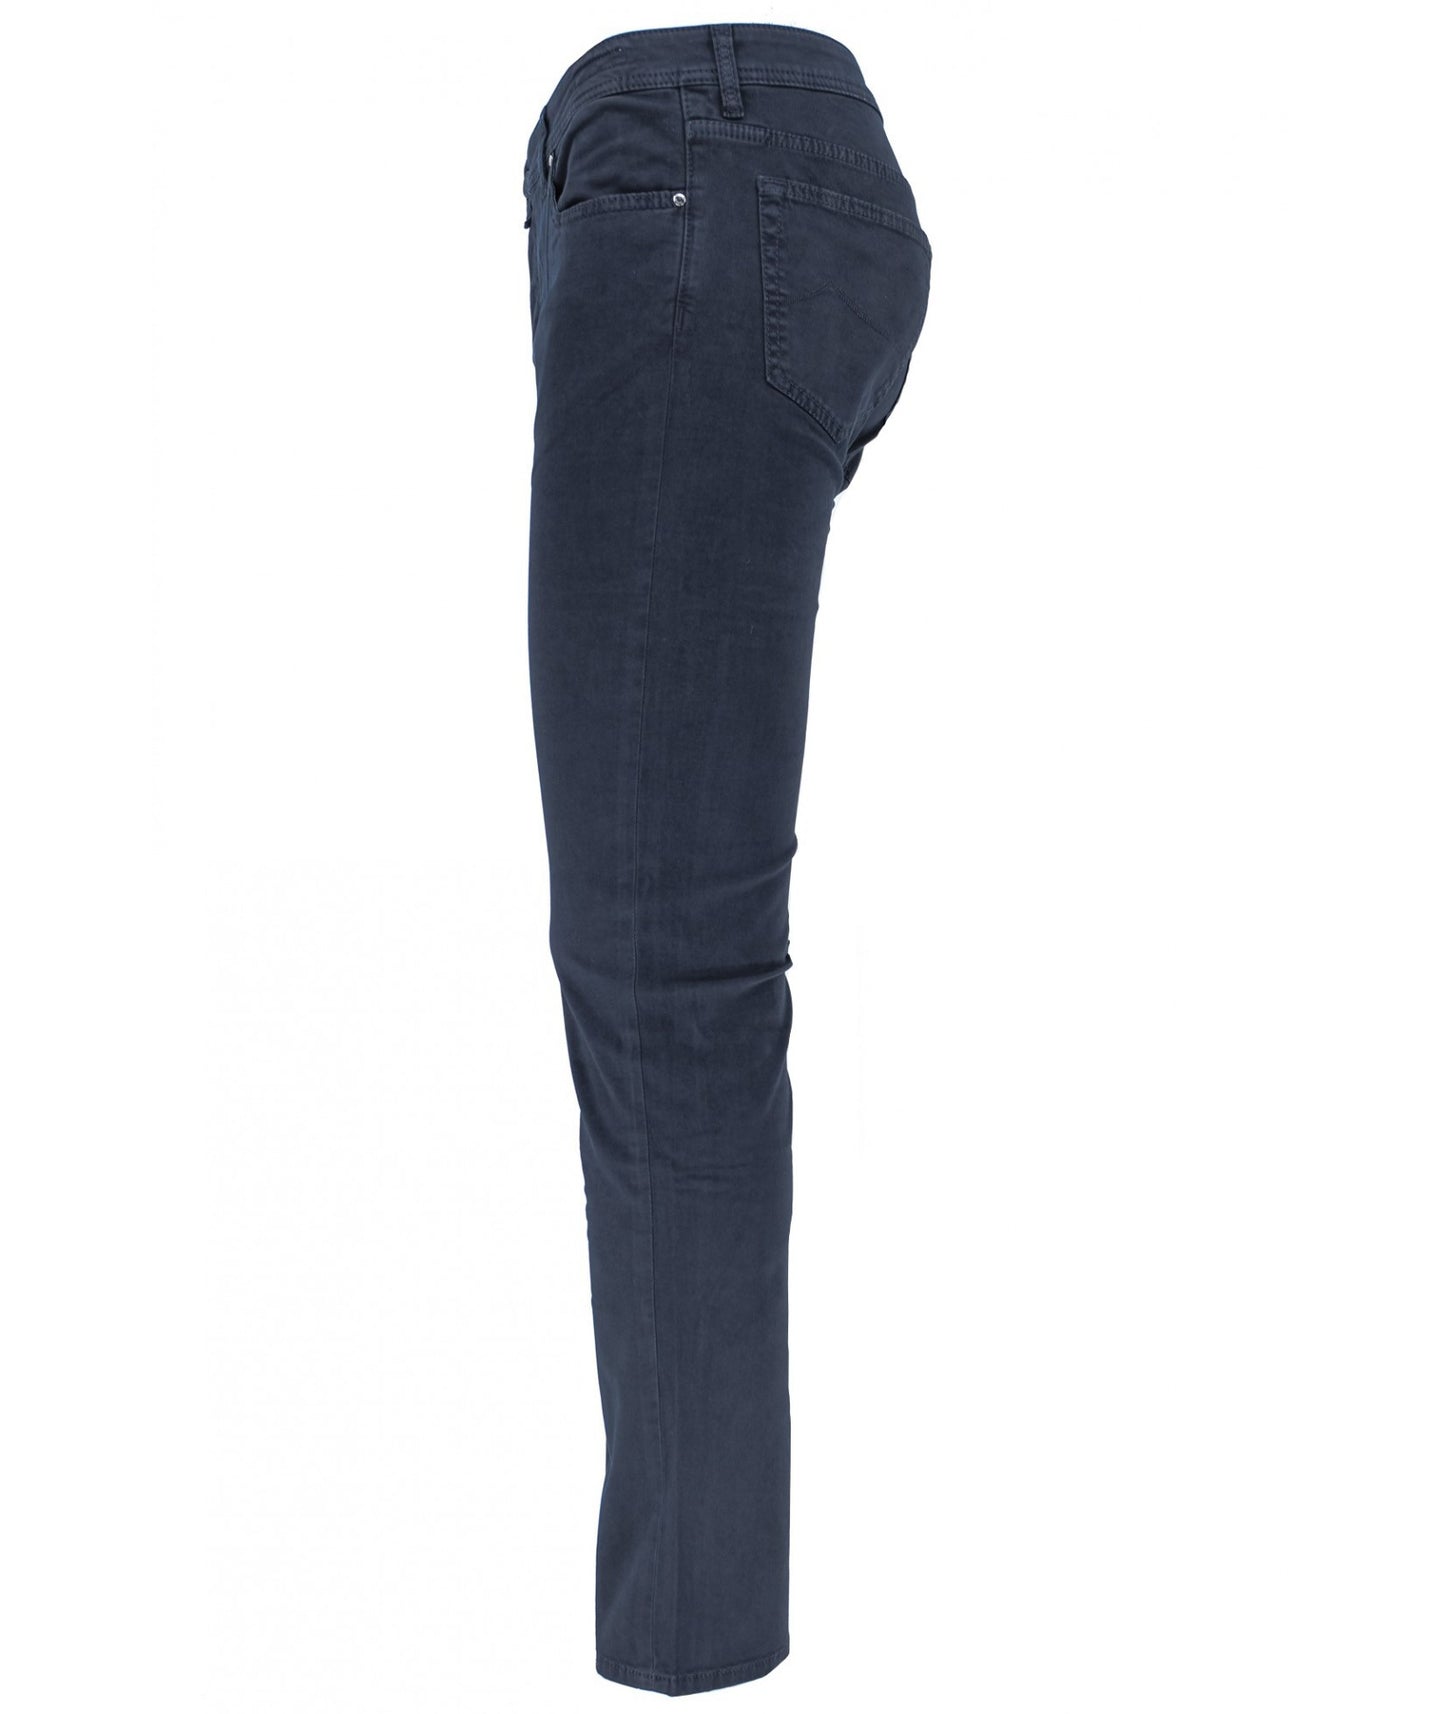 Jacob Cohën Men's Jeans Nick Slim Fit Navy 3651 - Side View